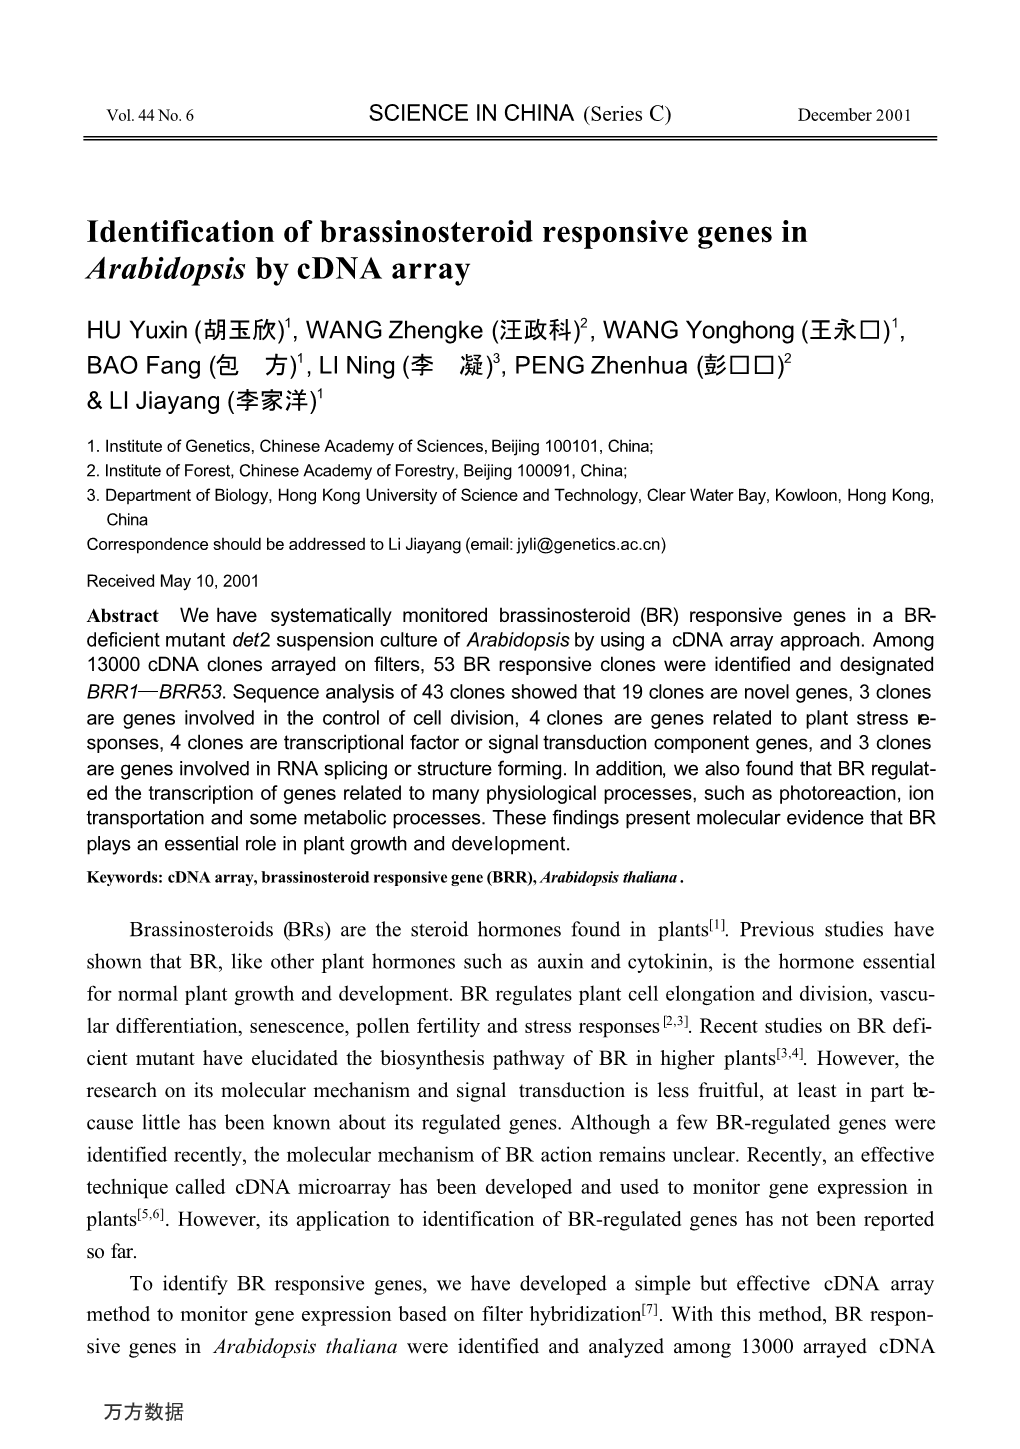 Identification of Brassinosteroid Responsive Genes in Arabidopsis by Cdna Array